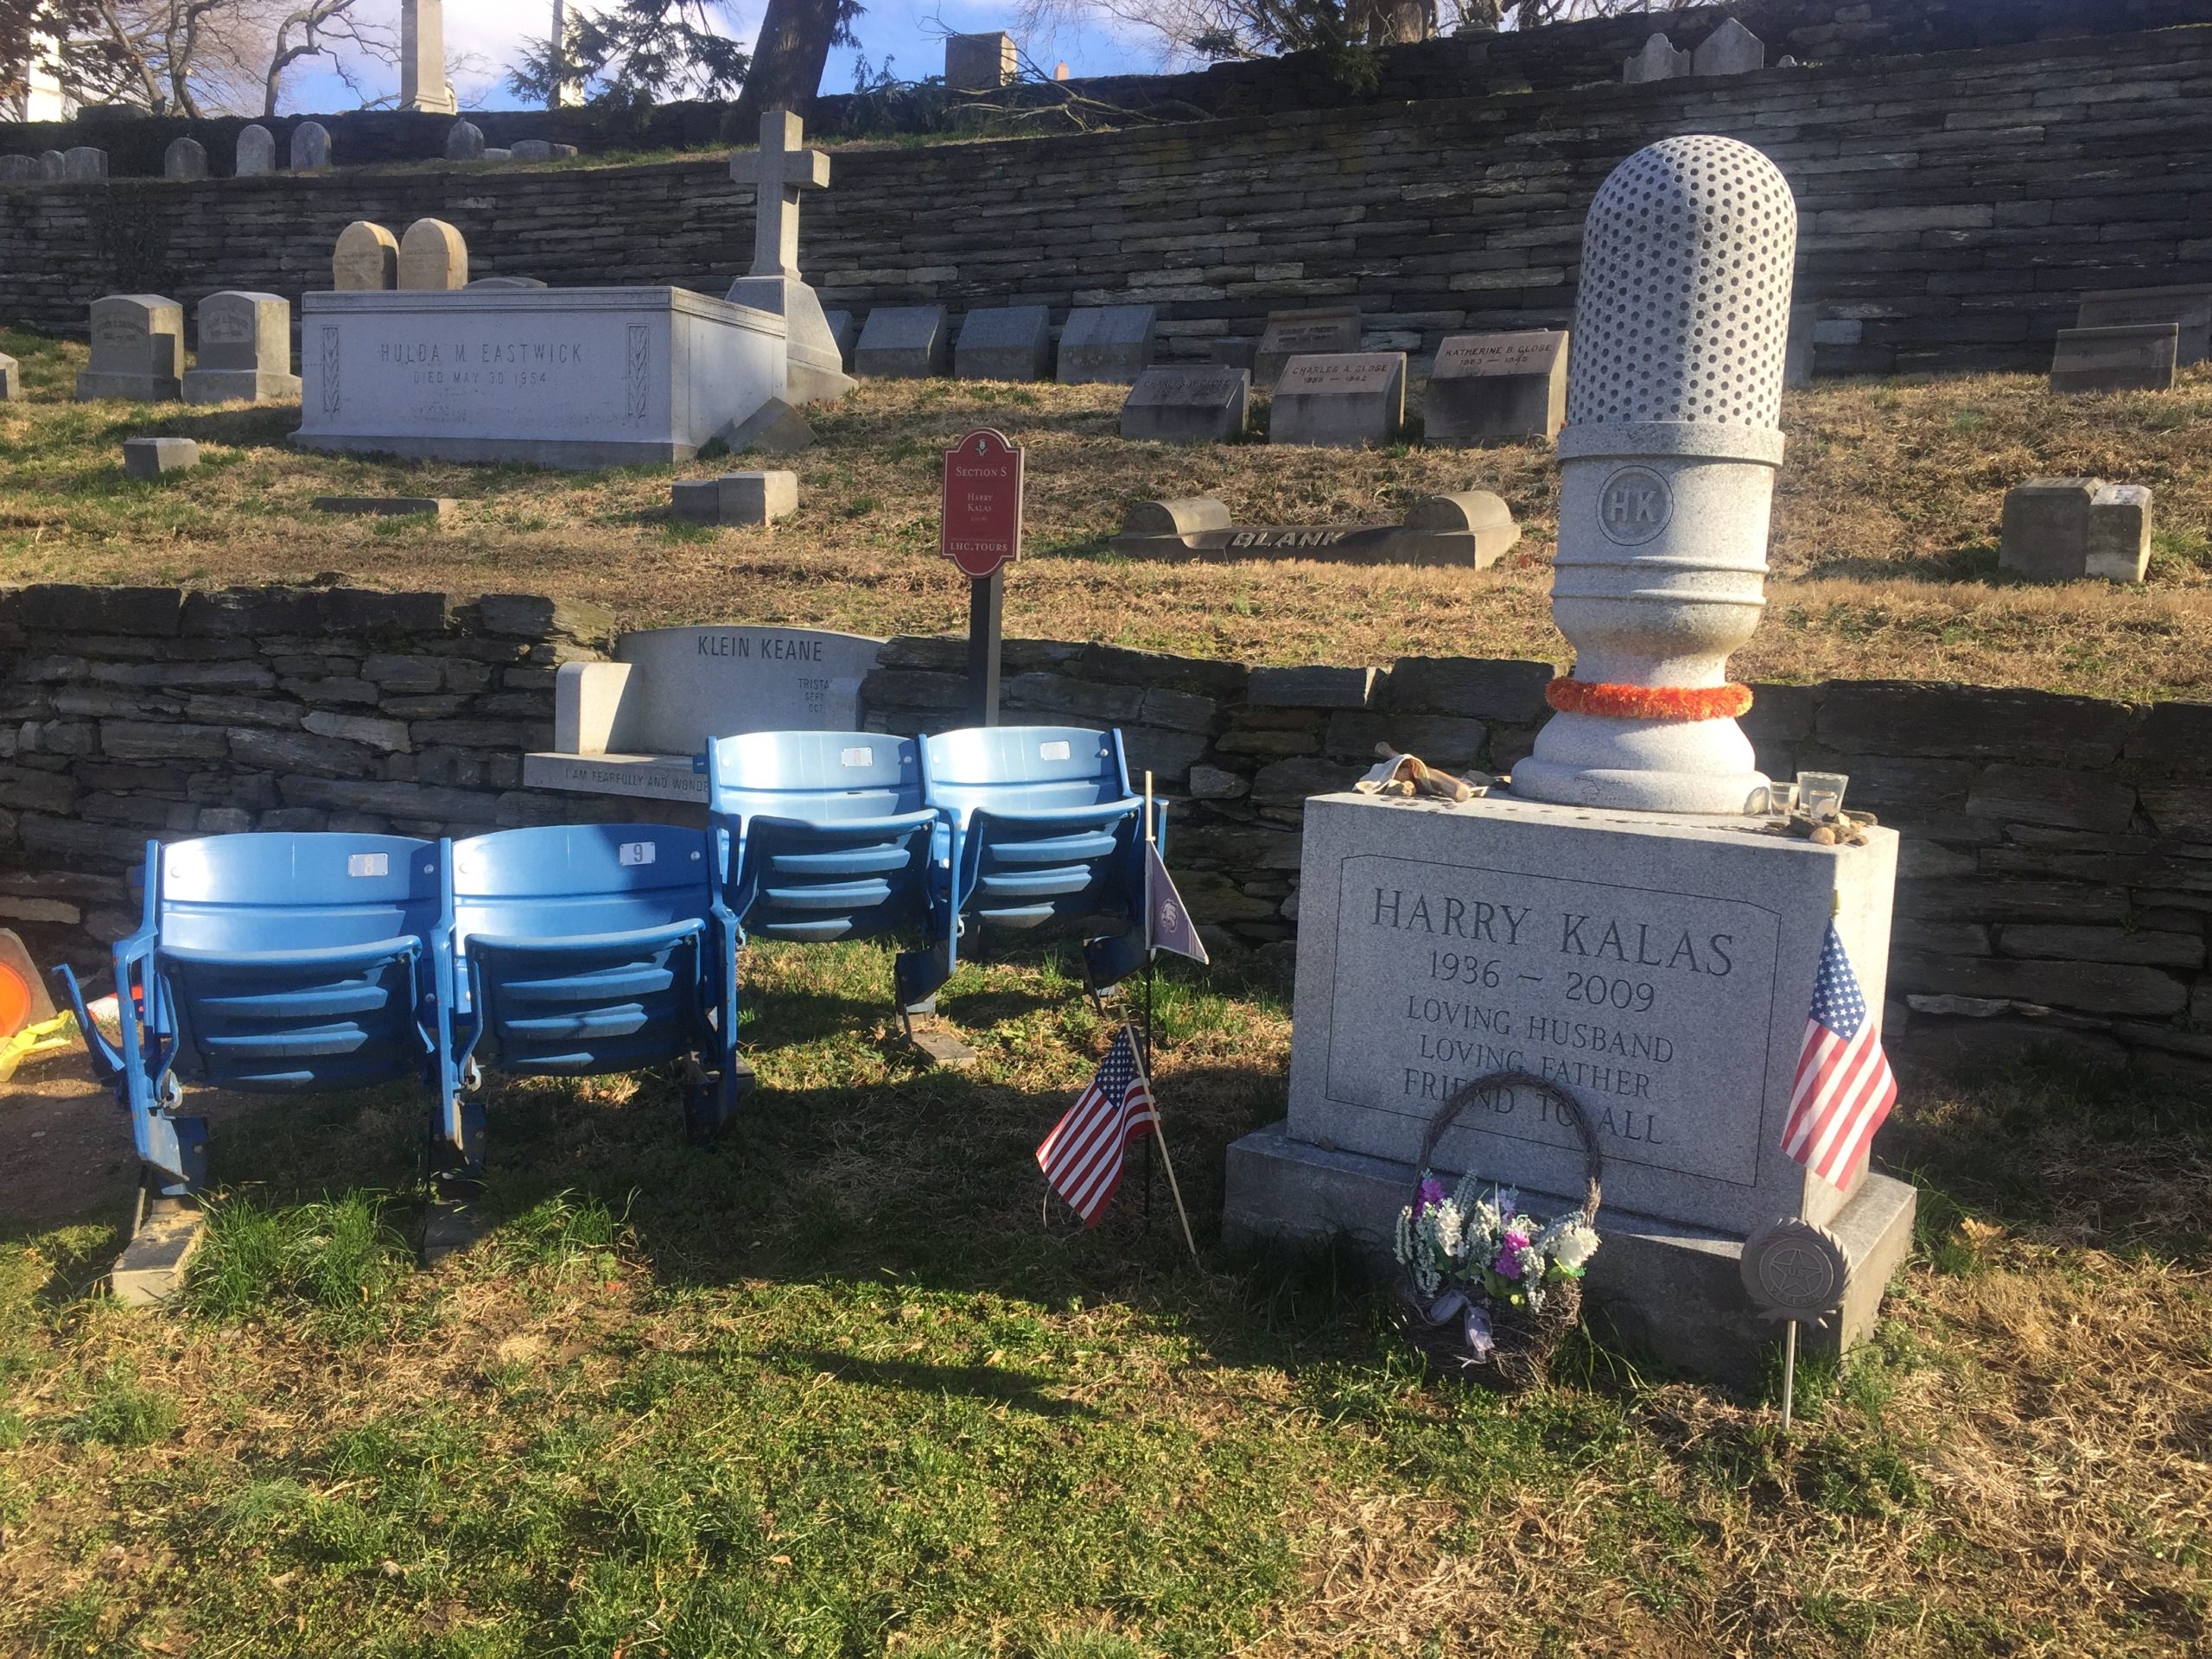 Erik Visits an American Grave, Part 1,097 - Lawyers, Guns & Money